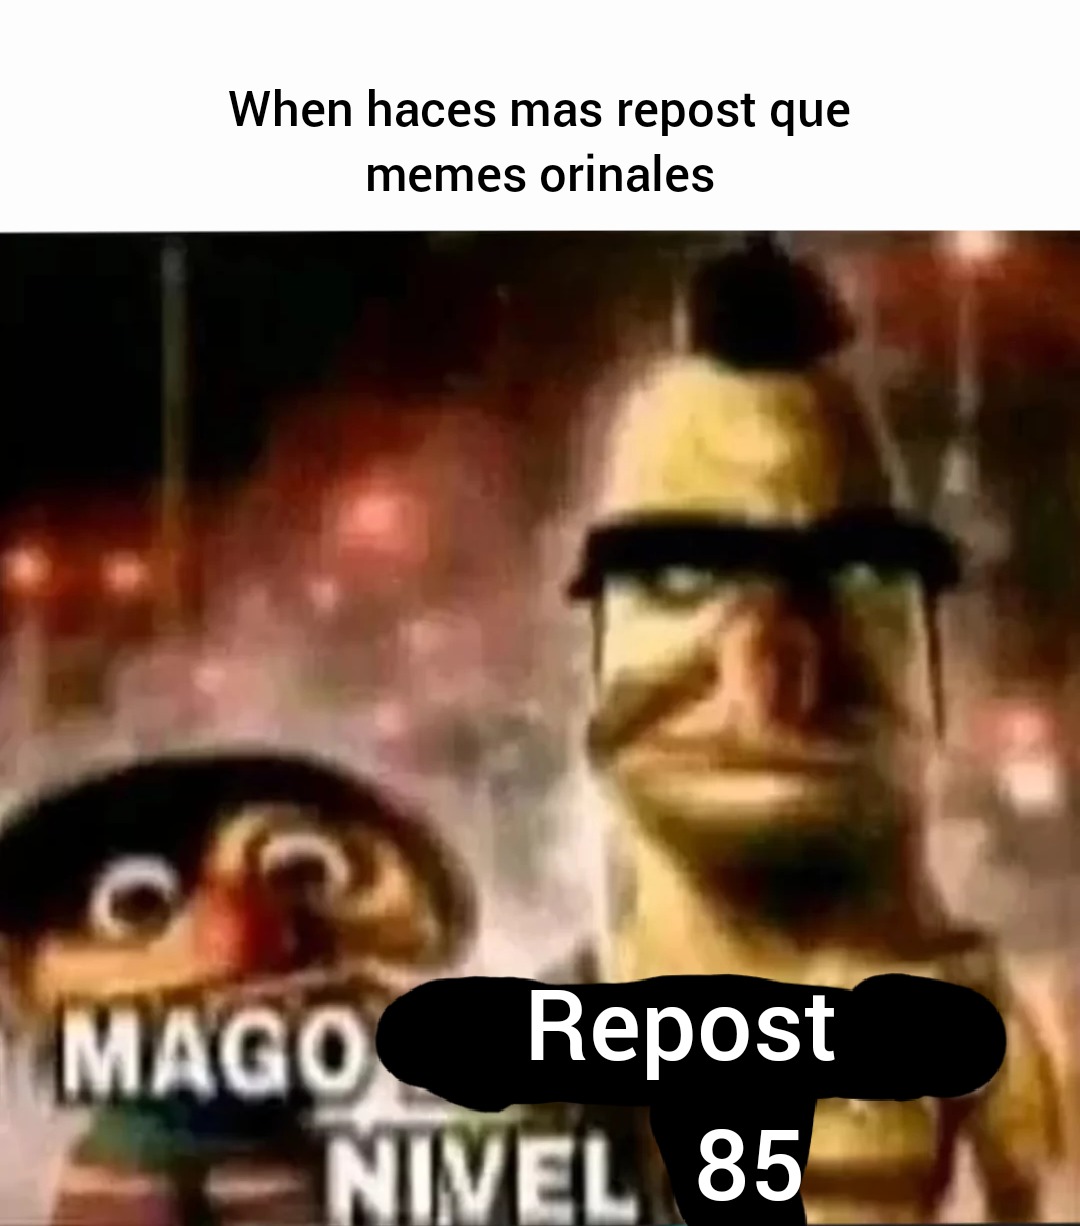 Mago Repost - meme